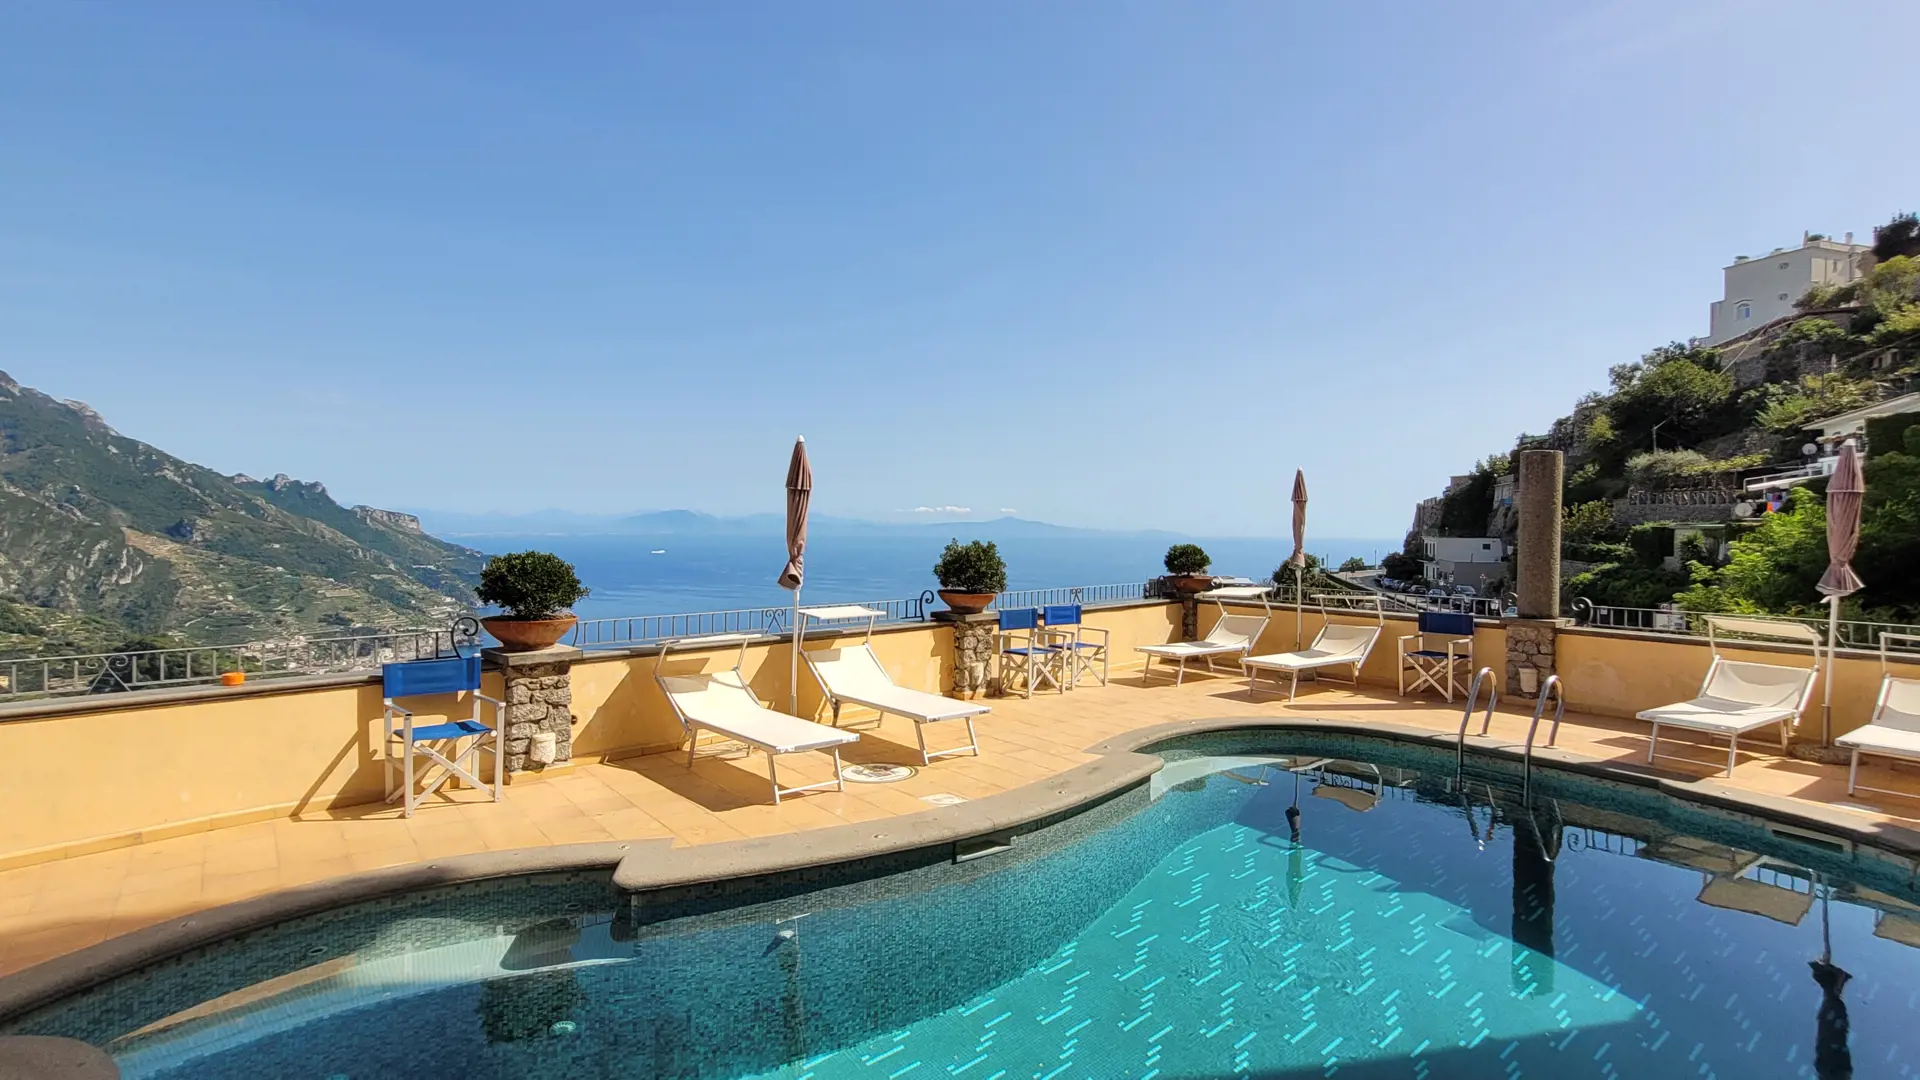 Hotel Bonadies har en pool med utsikt